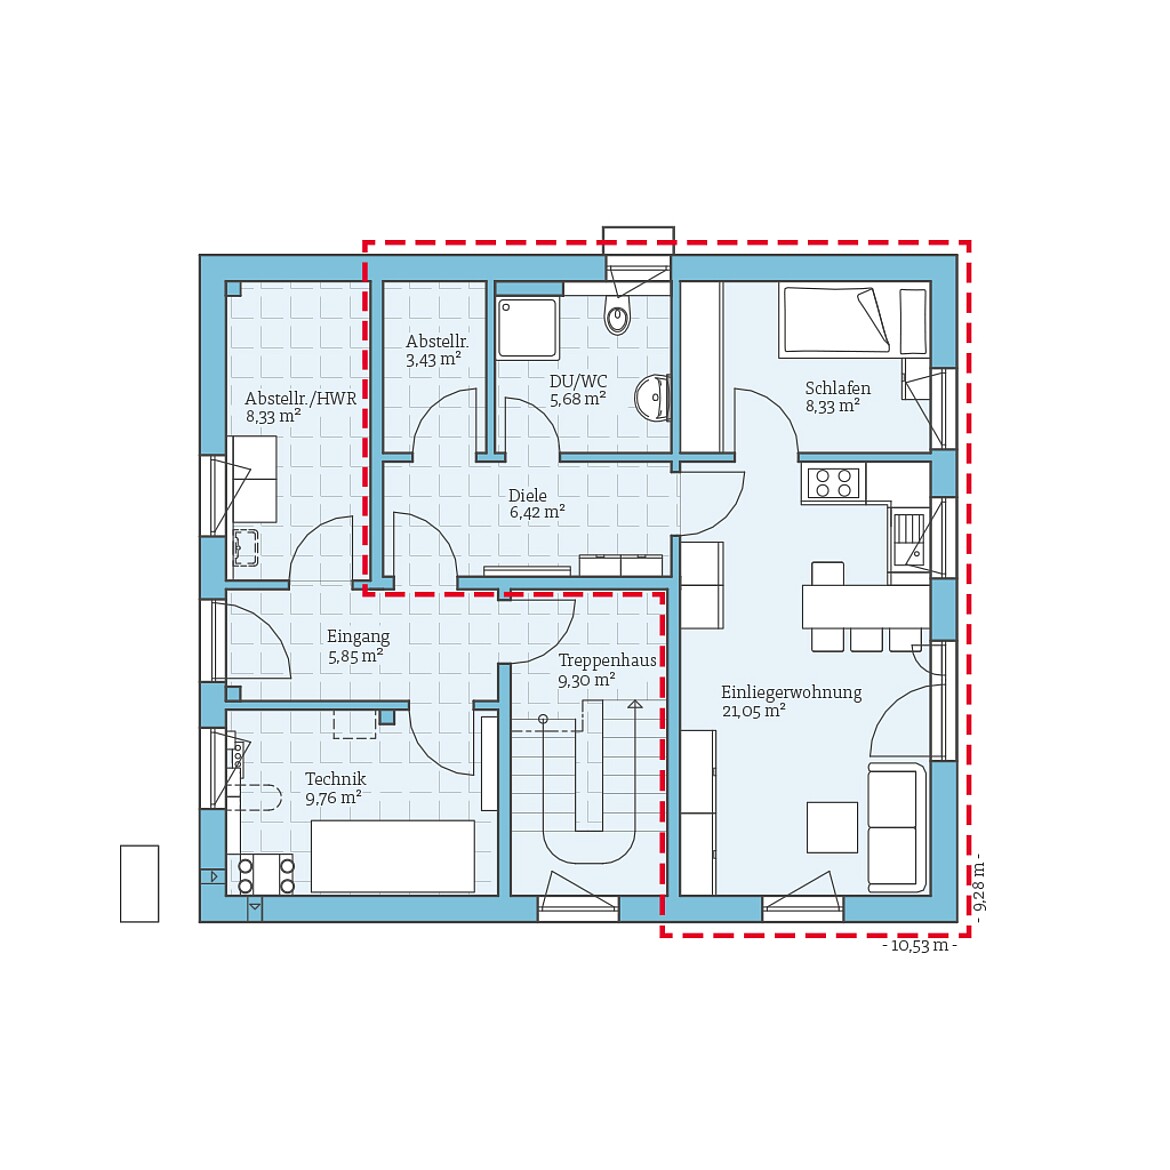 Prefabricated house Variant 25-166 with granny flat Variant 1: Basement floor plan